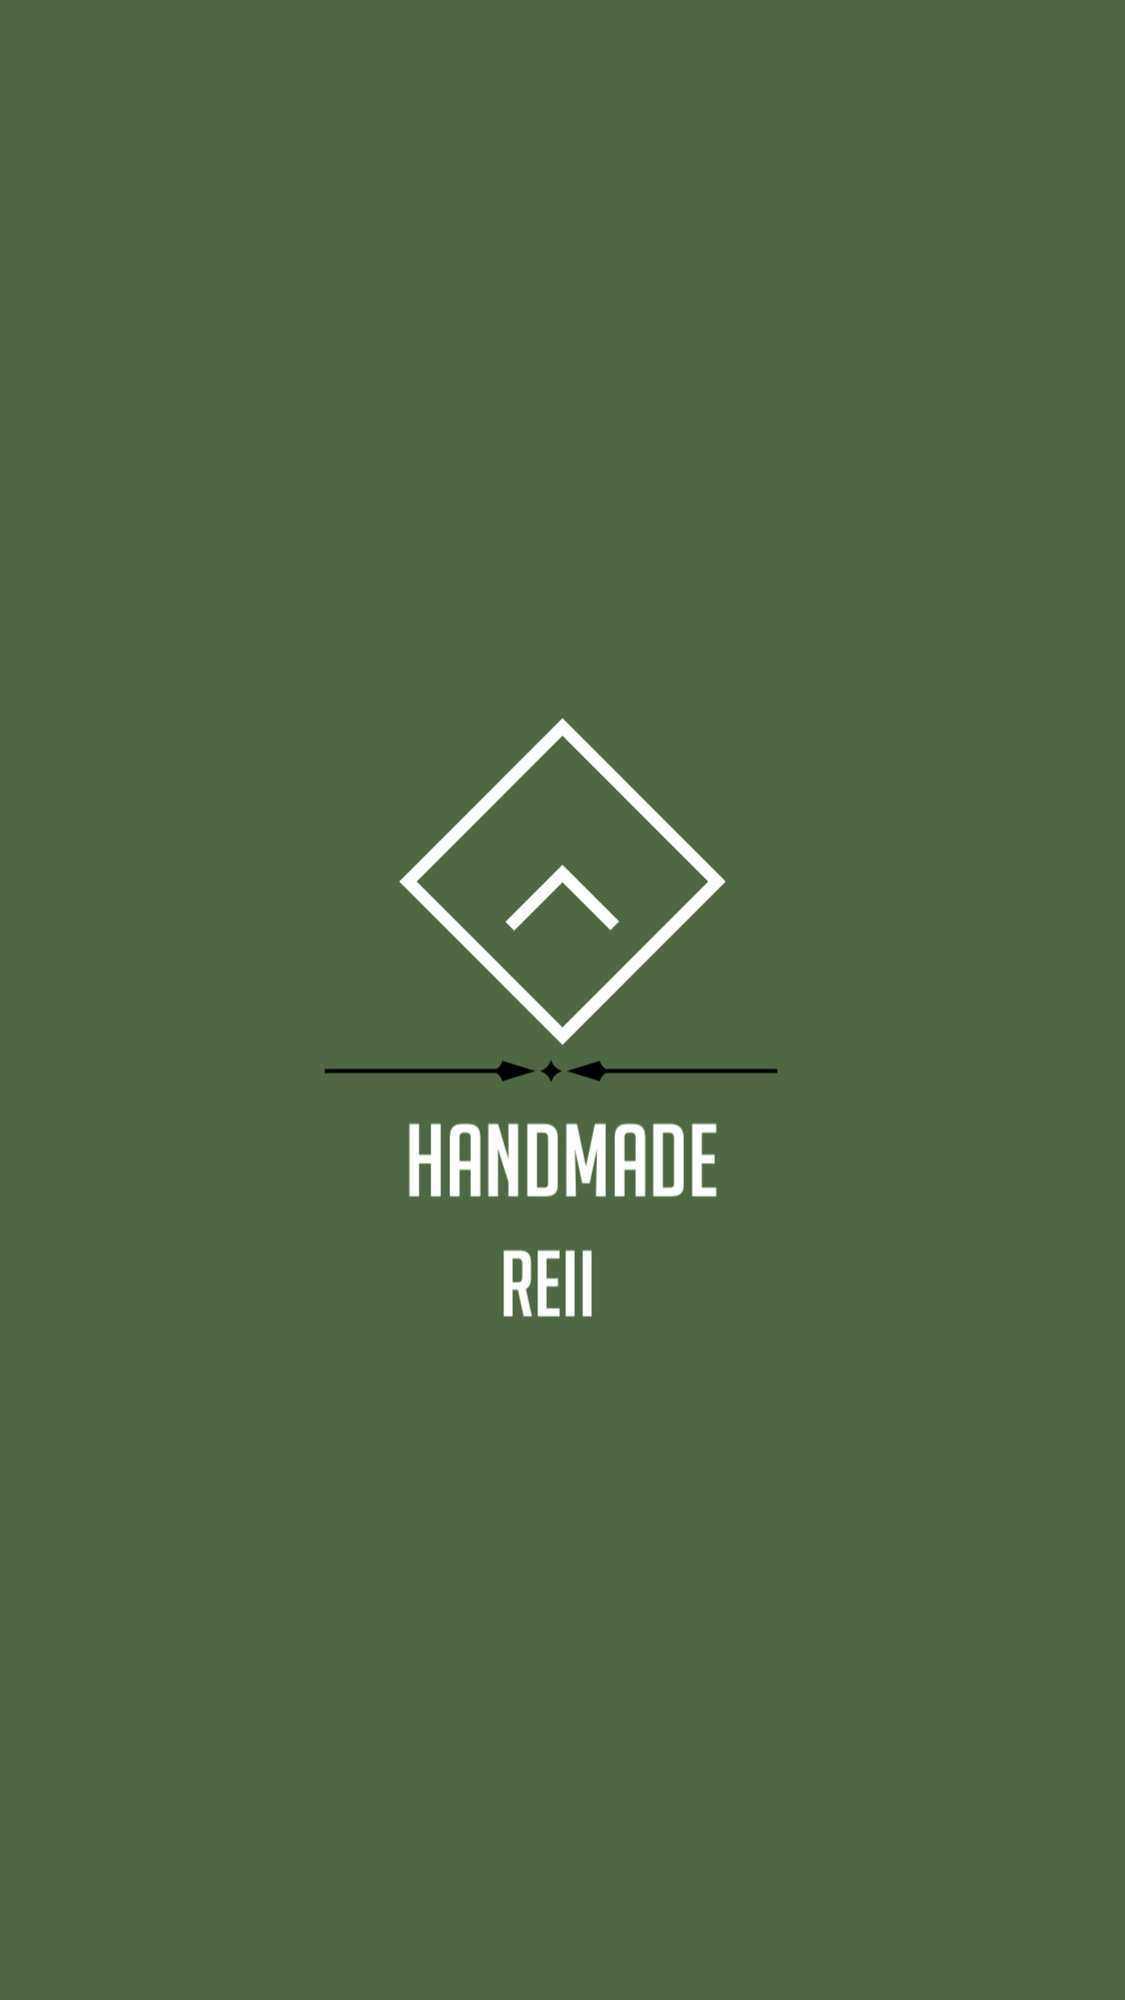 Handmade Reii logo